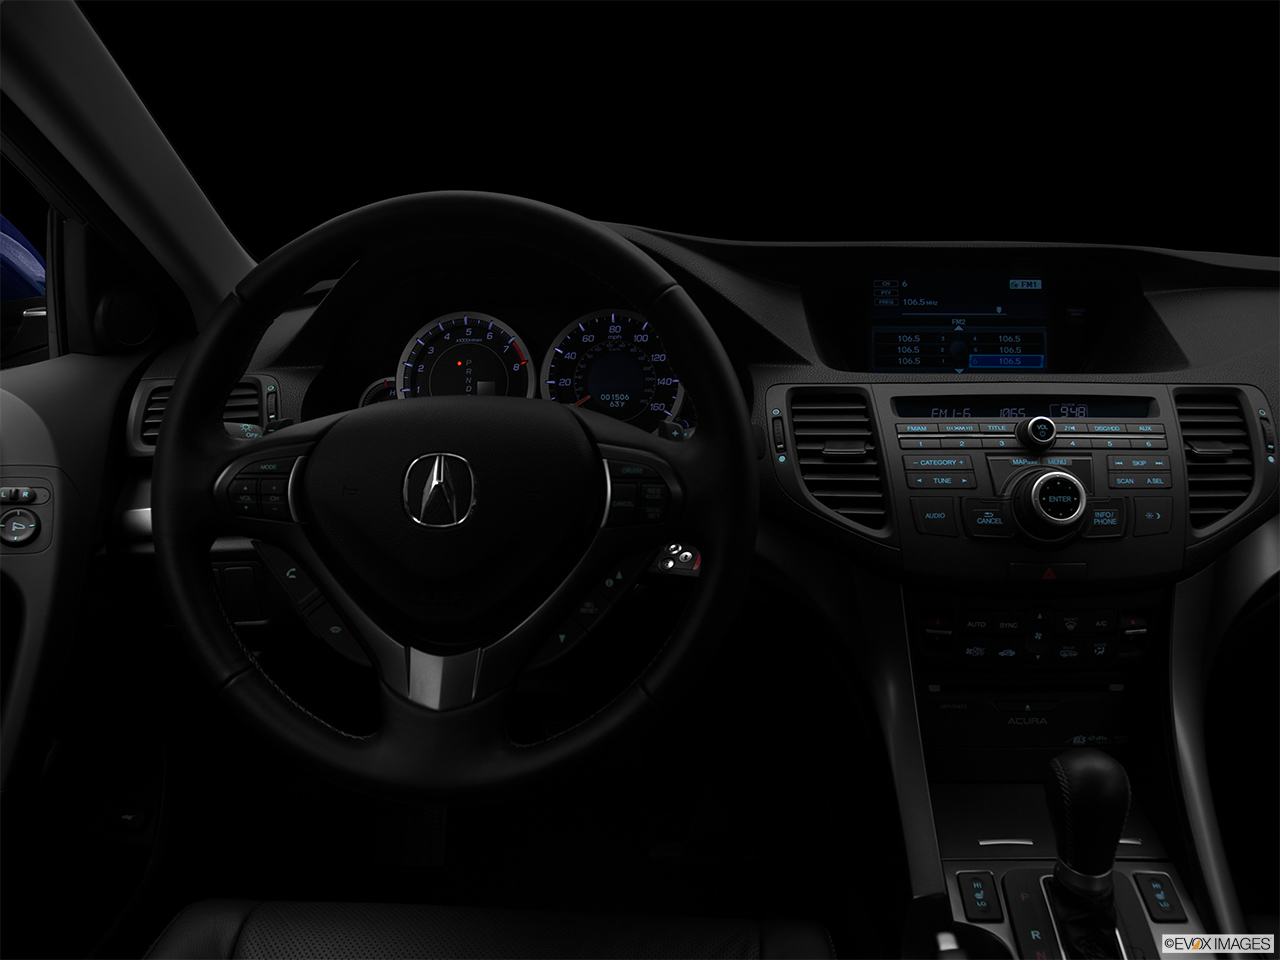 2011 Acura TSX Sport Wagon Centered wide dash shot - "night" shot. 